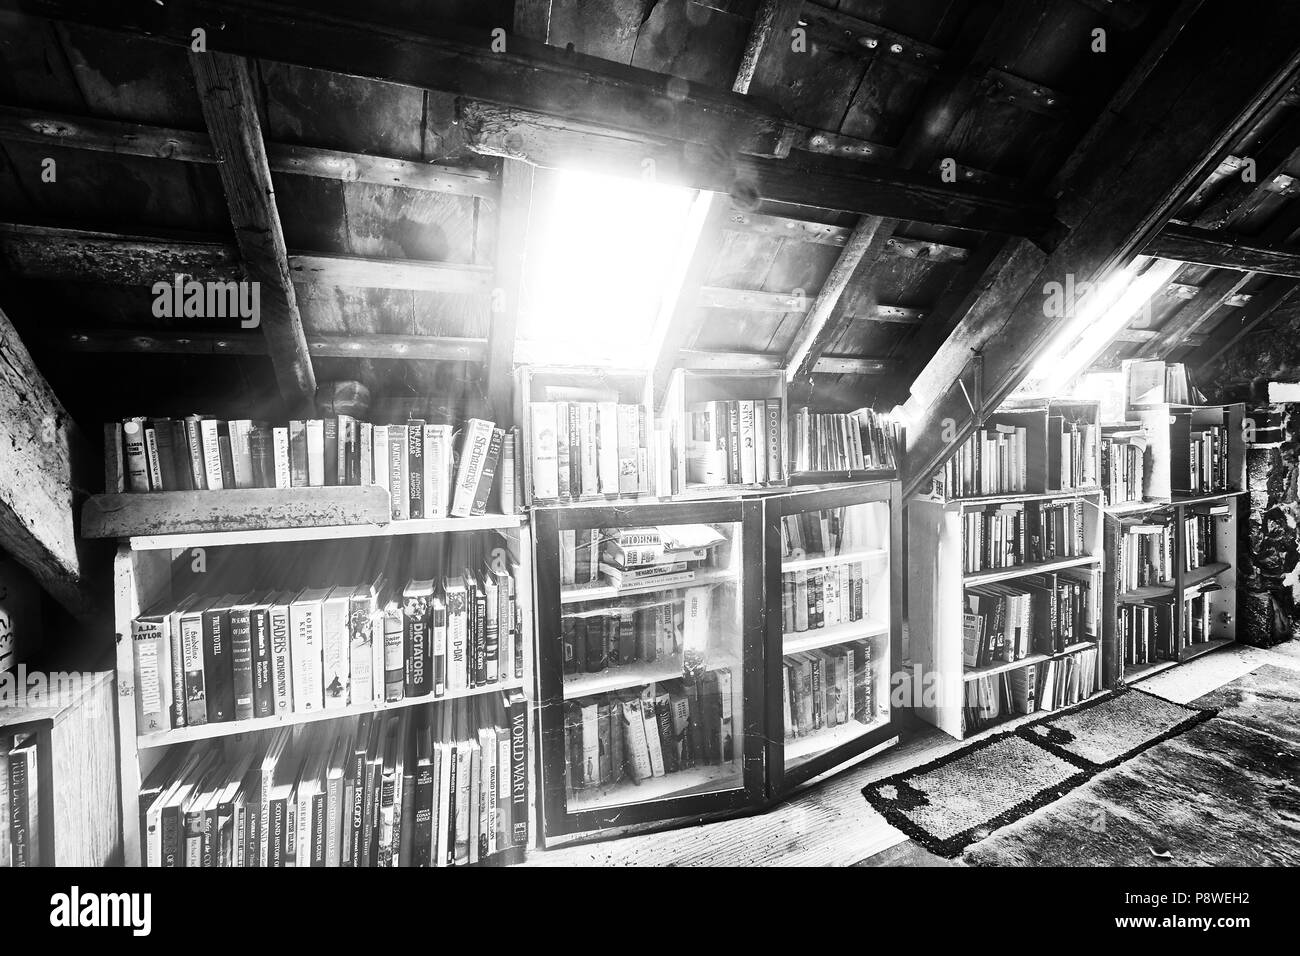 Farm house interior, Farm house interior, attic room reading corner under sunlit roof window, clutter of books on shelves (mono) Stock Photo